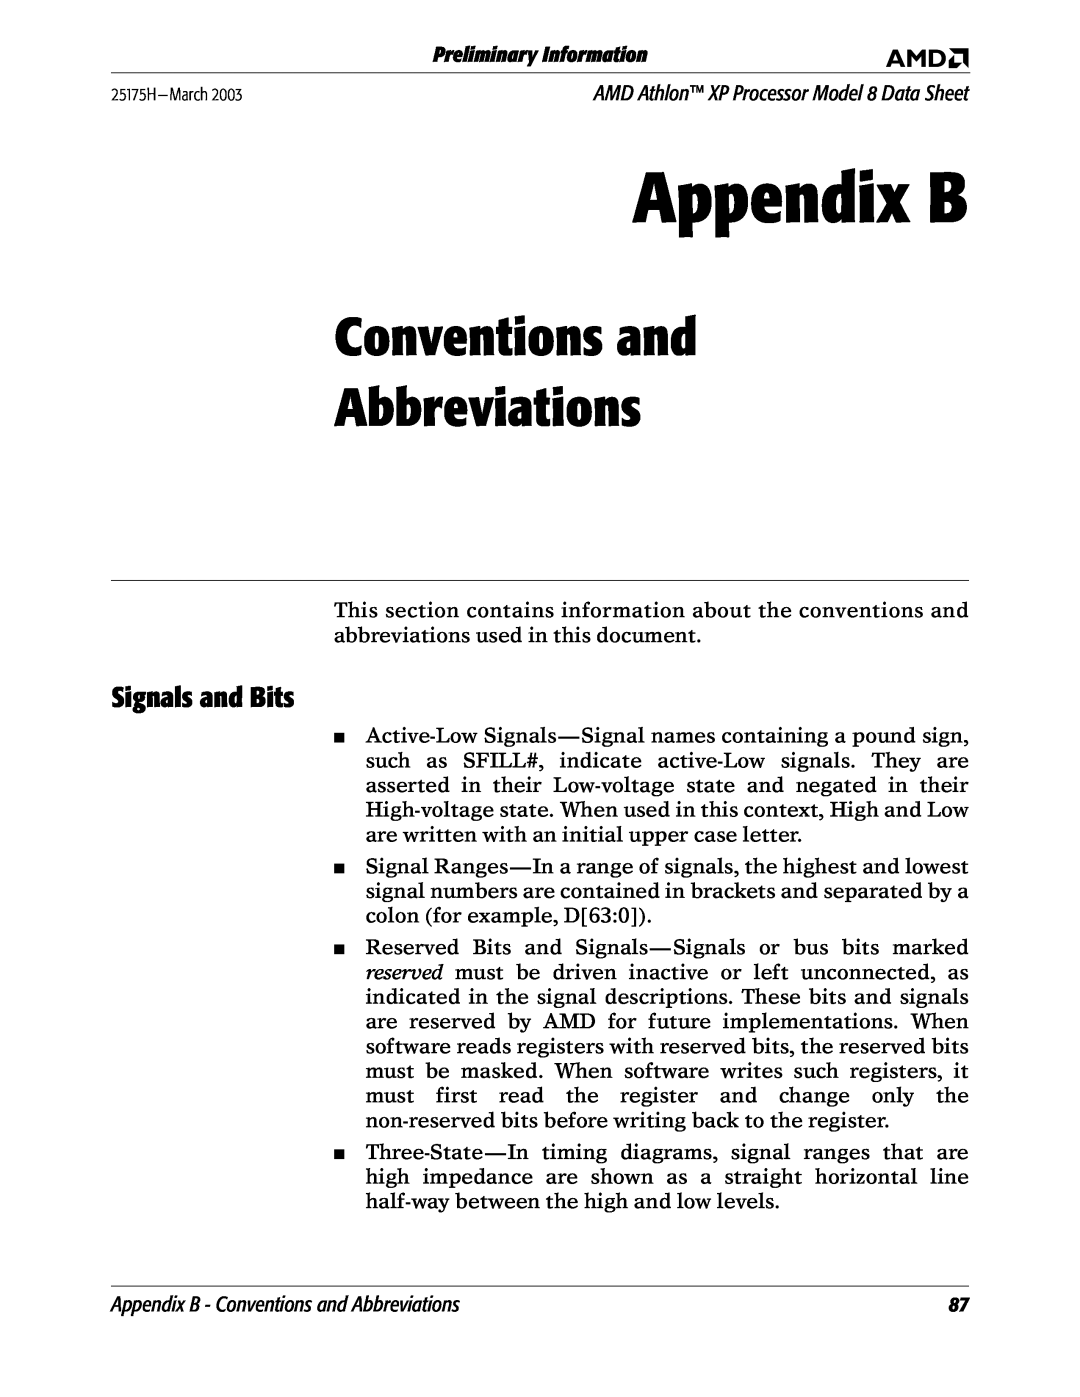 AMD 8 manual Signals and Bits, Appendix B - Conventions and Abbreviations, Preliminary Information 